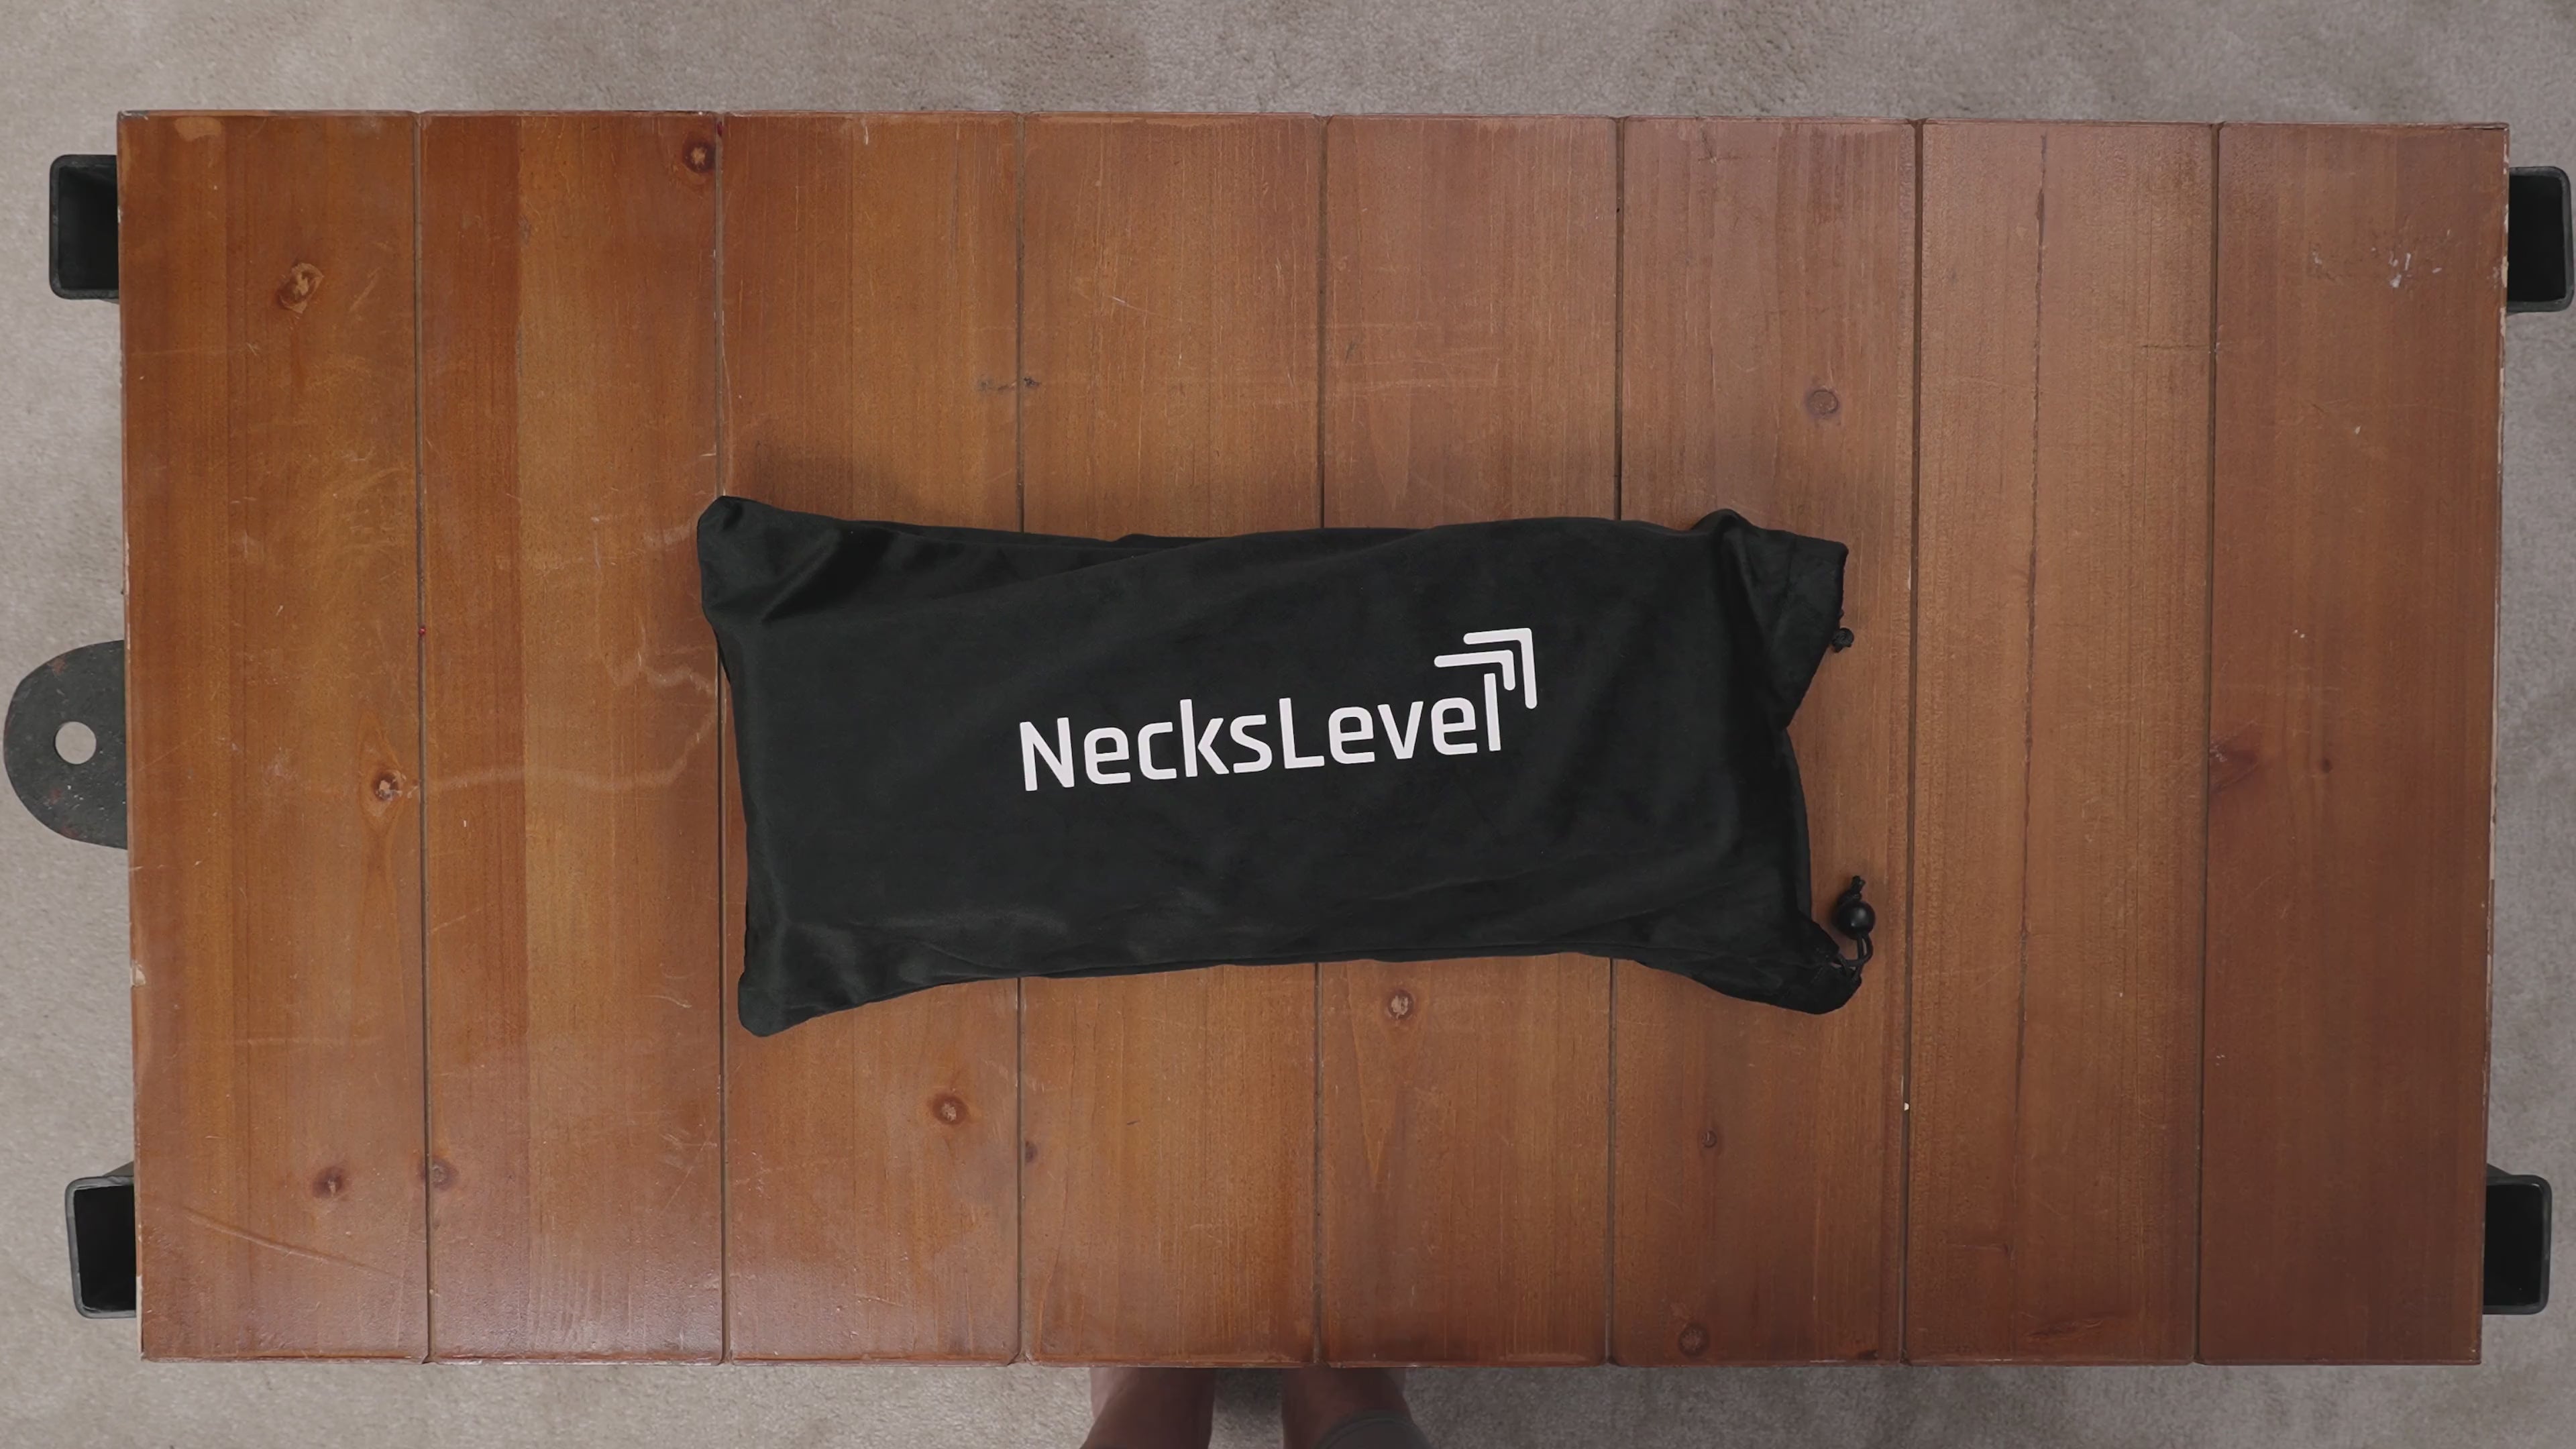 Load video: NecksLevel Glide unboxing video